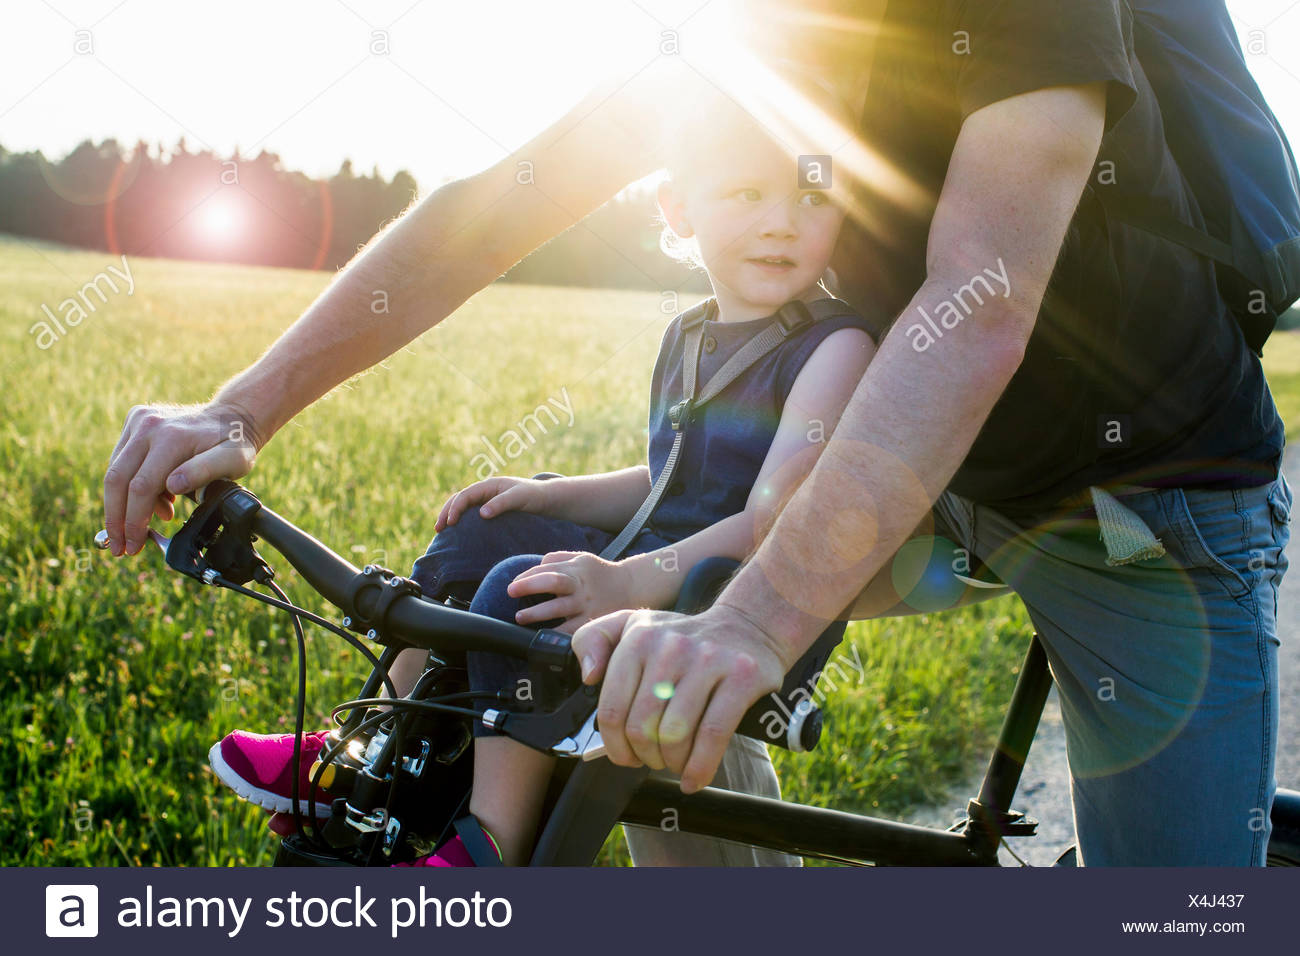 bike and baby